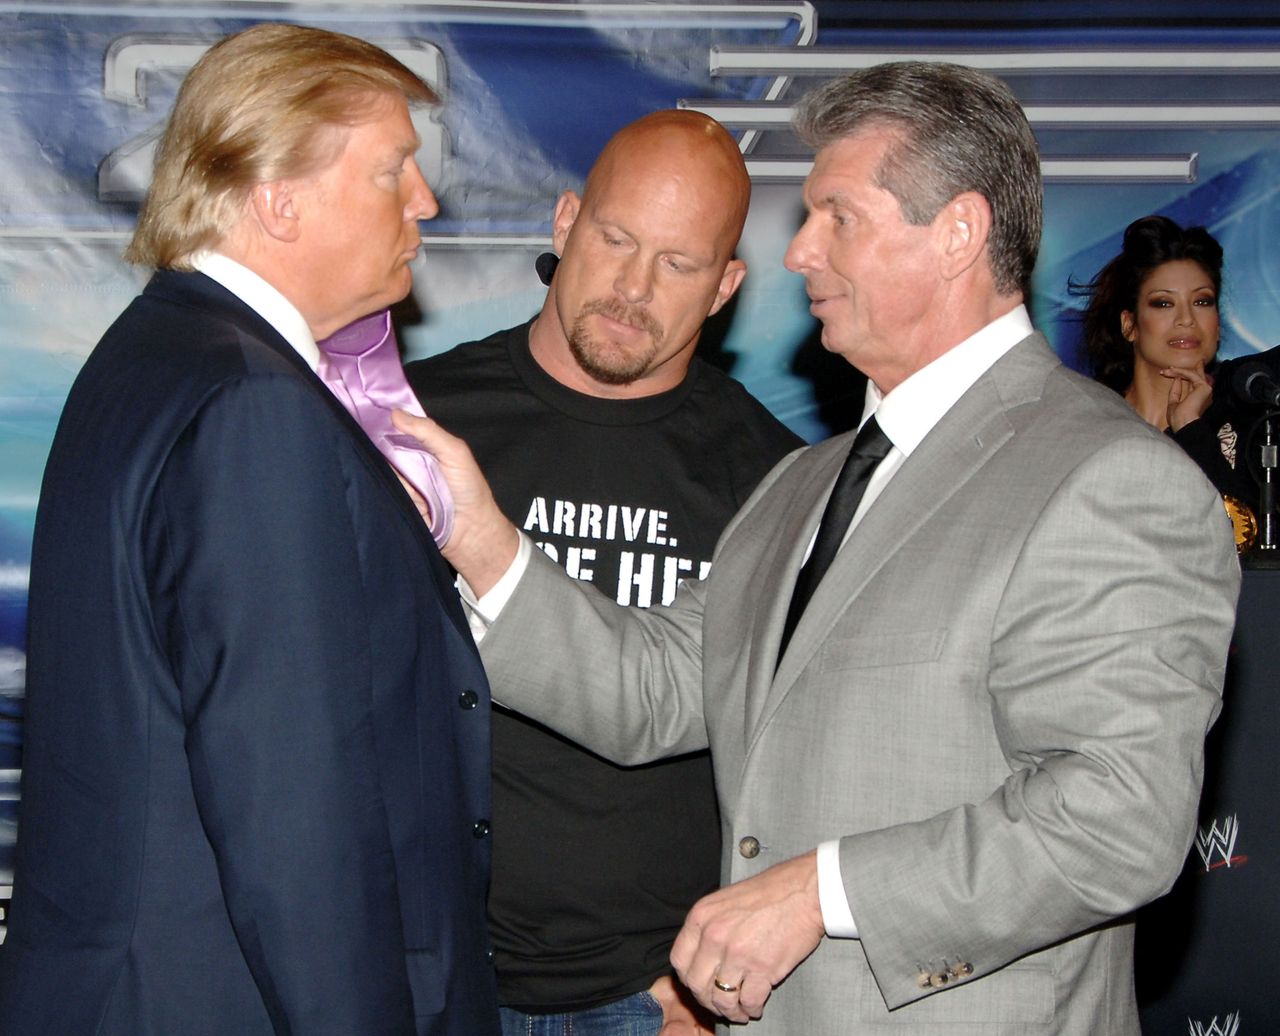 Donald Trump, Stone Cold Steve Austin and Vince McMahon spent months promoting The Battle of the Billionaires.